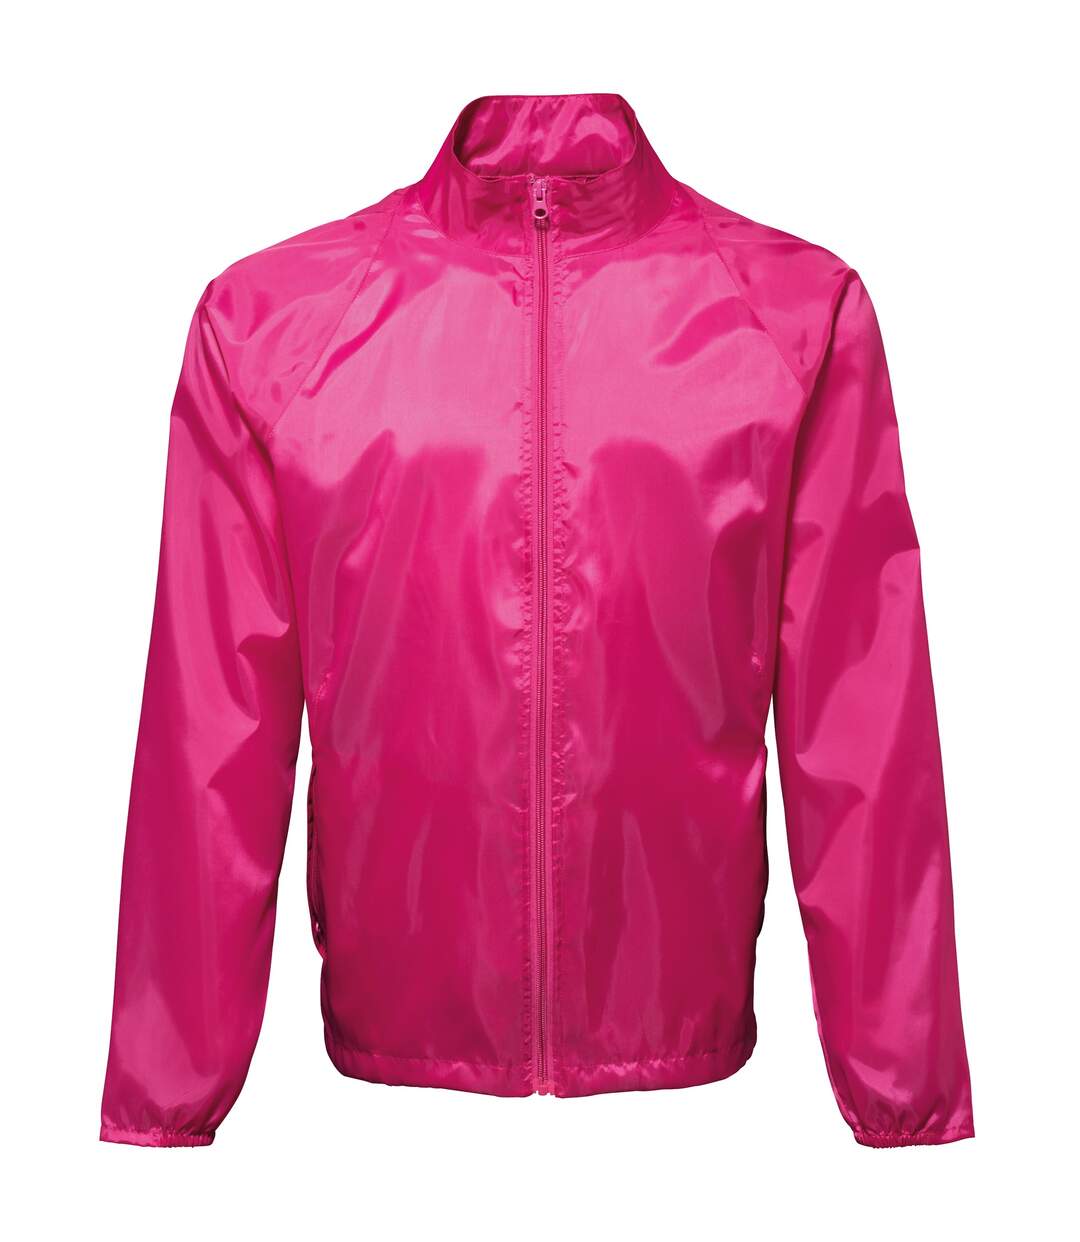 2786 Unisex Lightweight Plain Wind & Shower Resistant Jacket (Hot Pink)